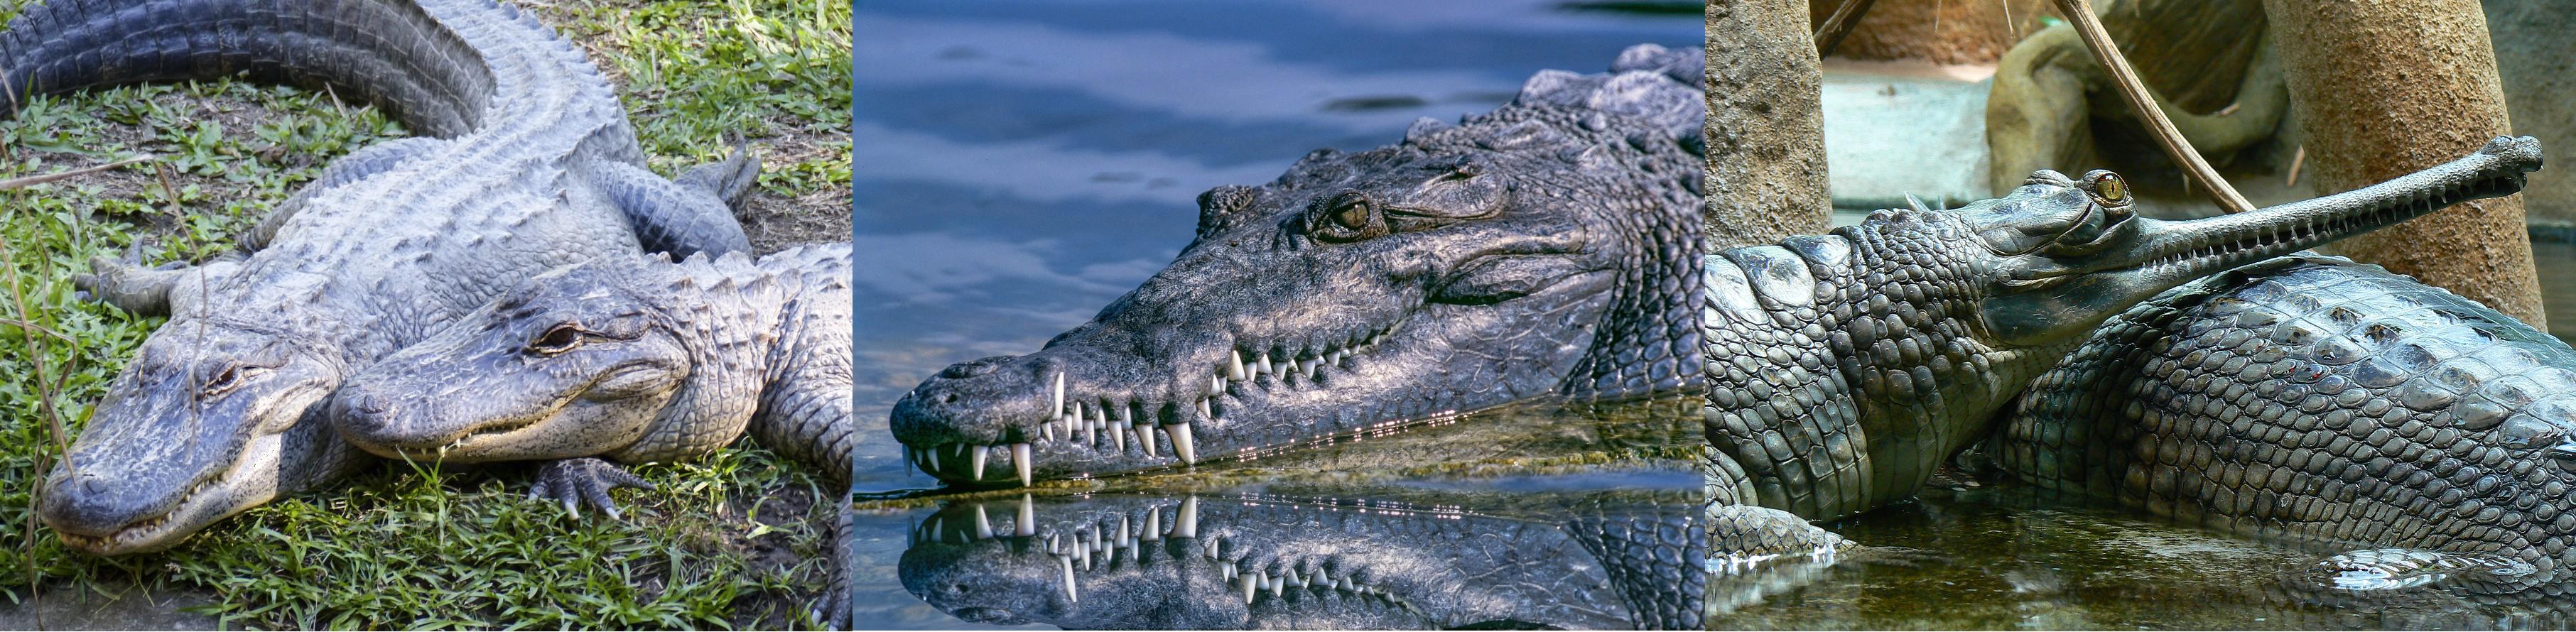 Ordem Crocodylia